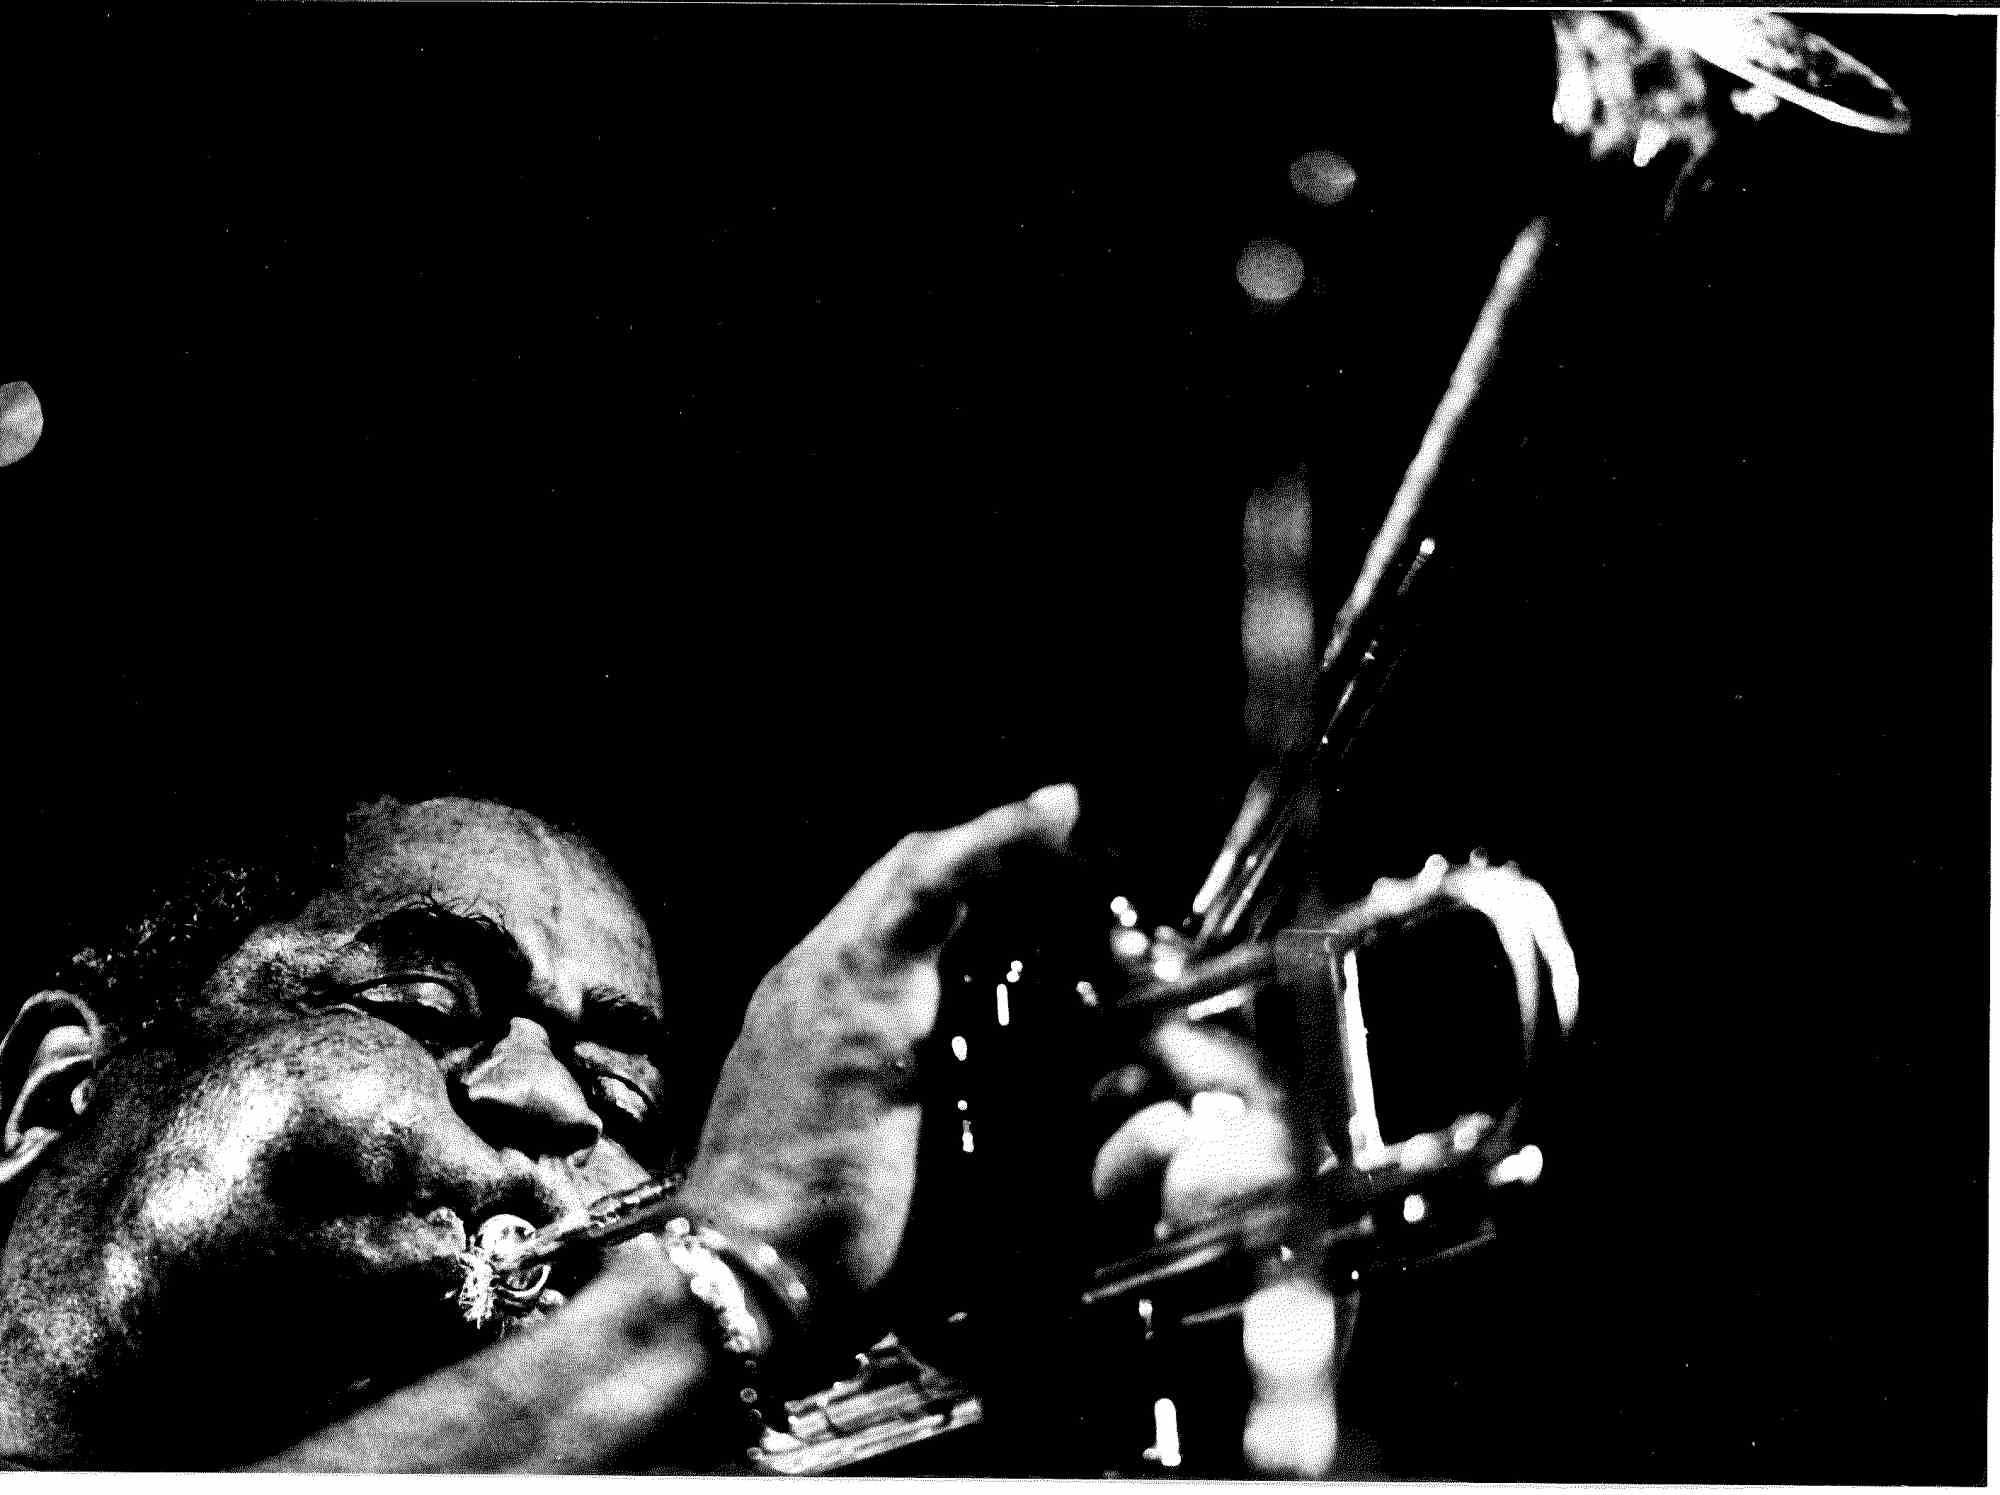 Unknown Portrait Photograph - Dizzy Gillespie Playing the Trumpet - Vintage Photo - 1970s